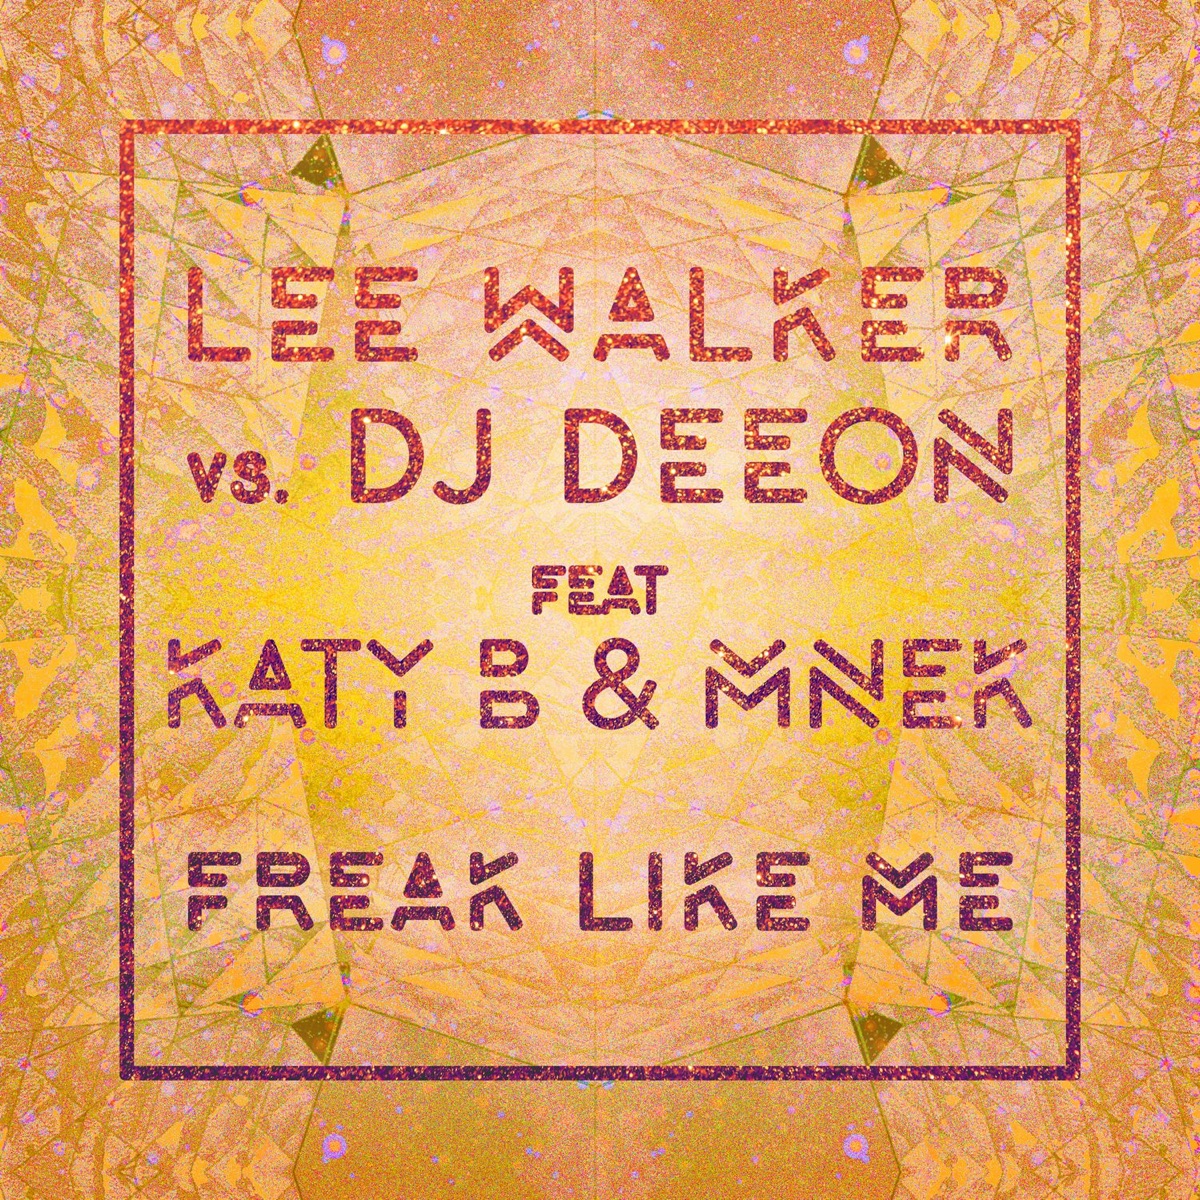 Lee Walker & DJ Deeon featuring Katy B & MNEK — Freak Like Me cover artwork